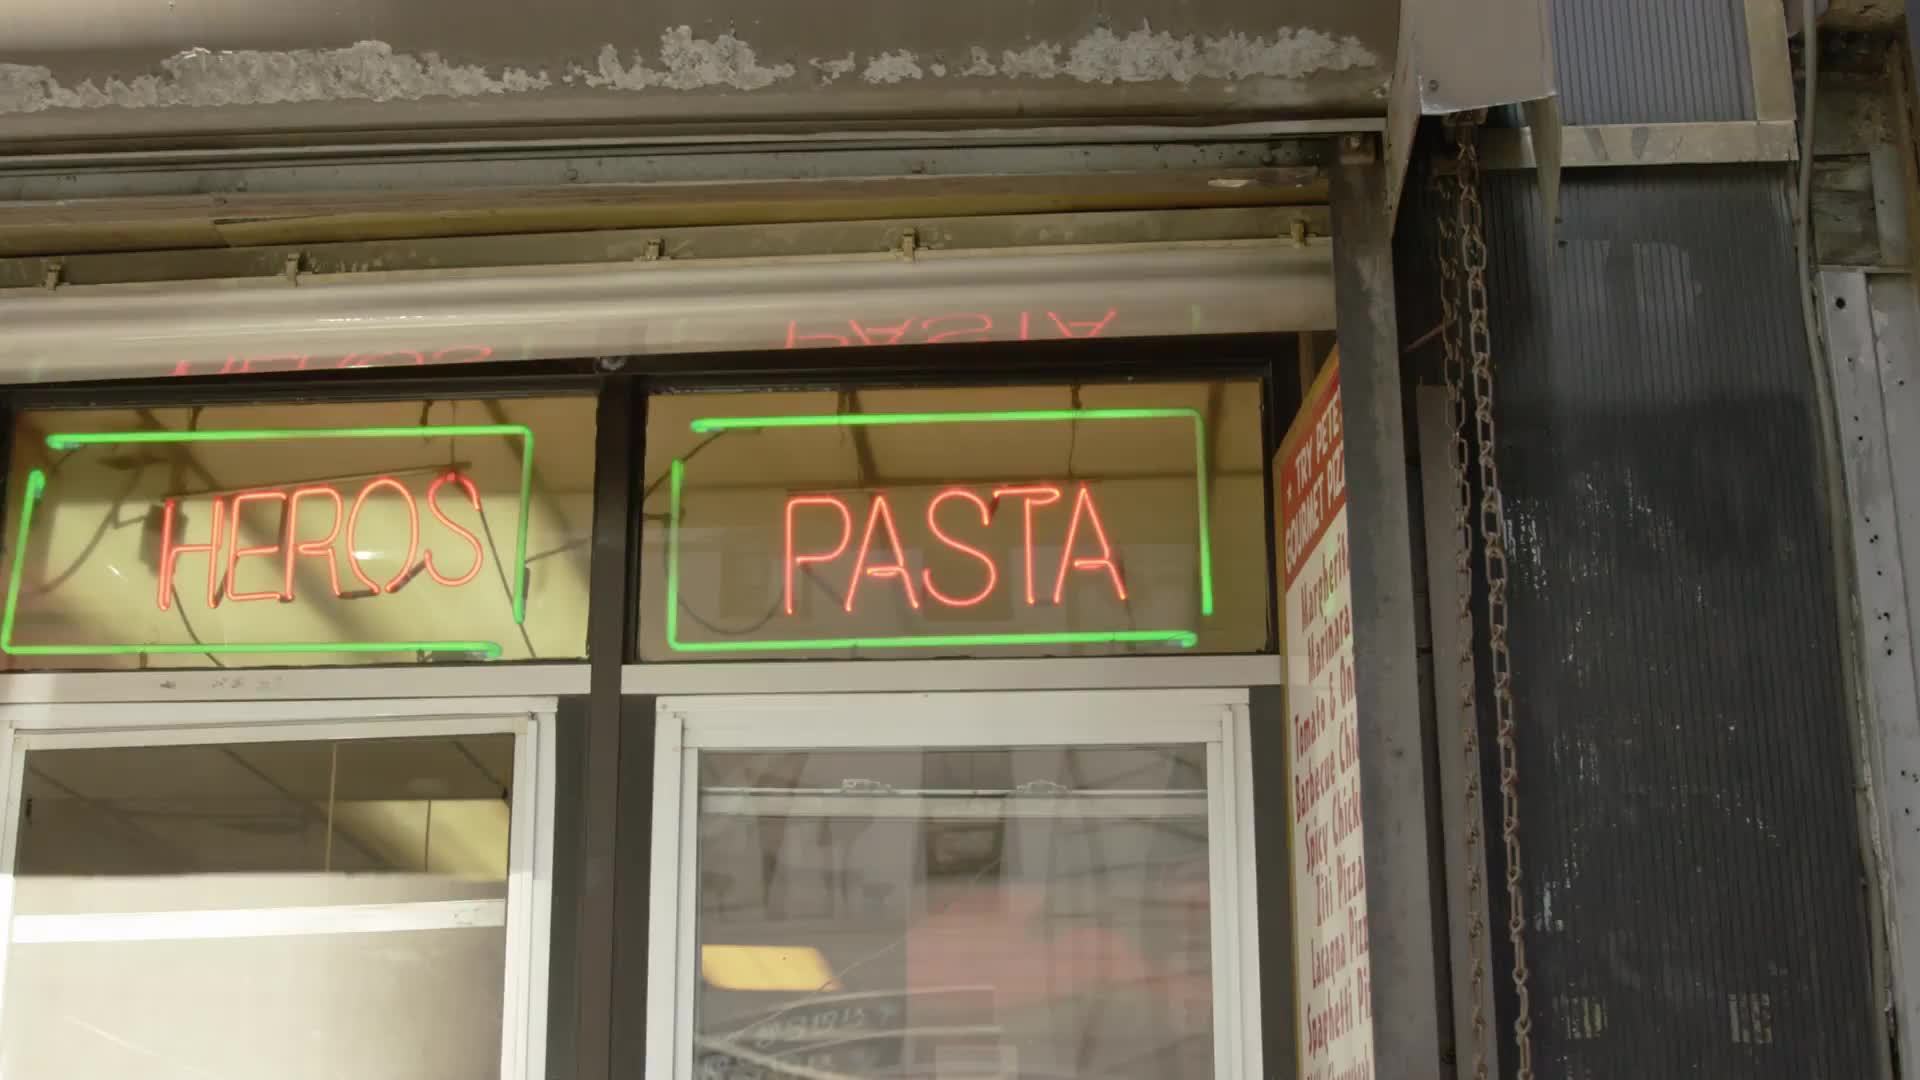 neon heros and pasta sign in pizzeria deli shop with cook in uniform in window